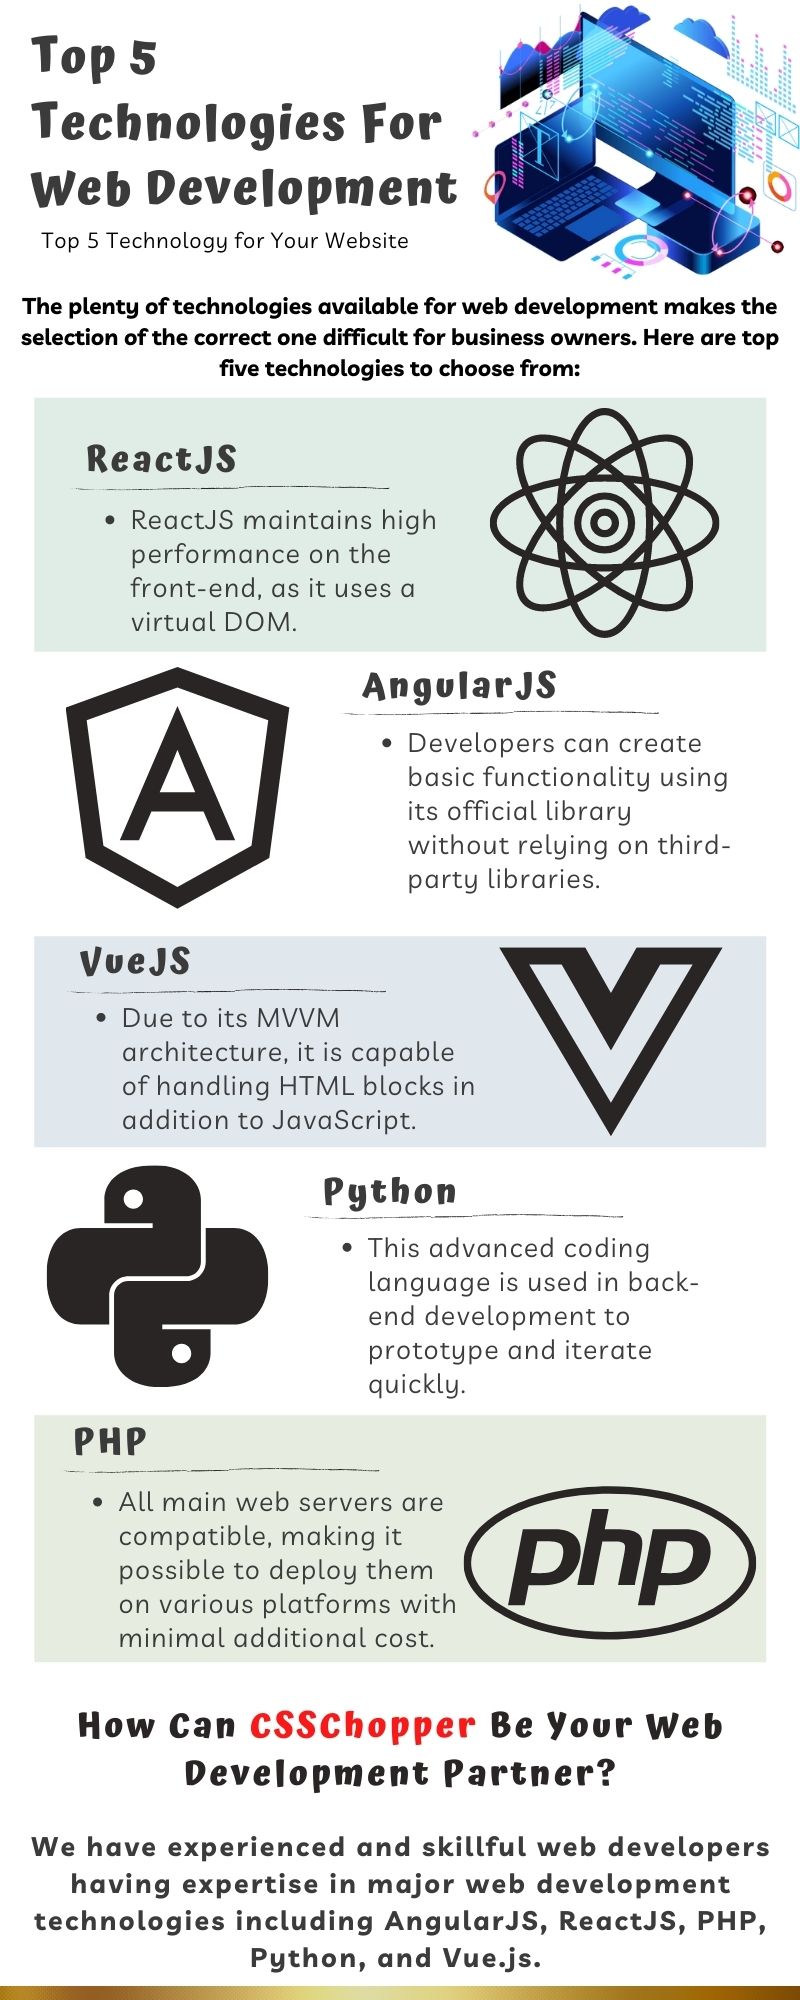 Top 5 Technologies For Web Development (1)